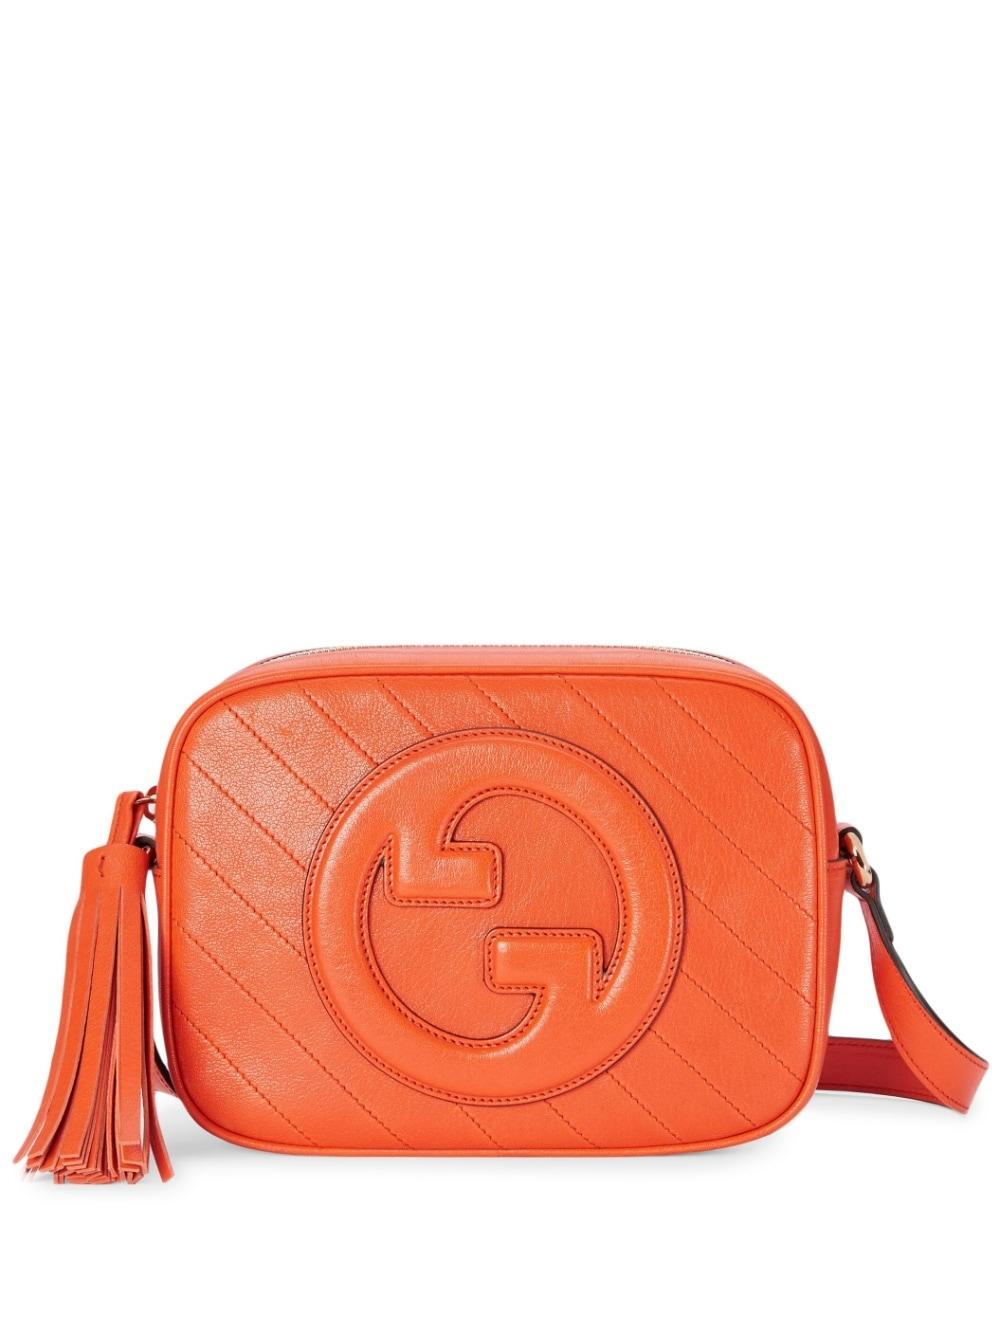 Gucci Blondie Leather Crossbody Bag in Orange | Lyst